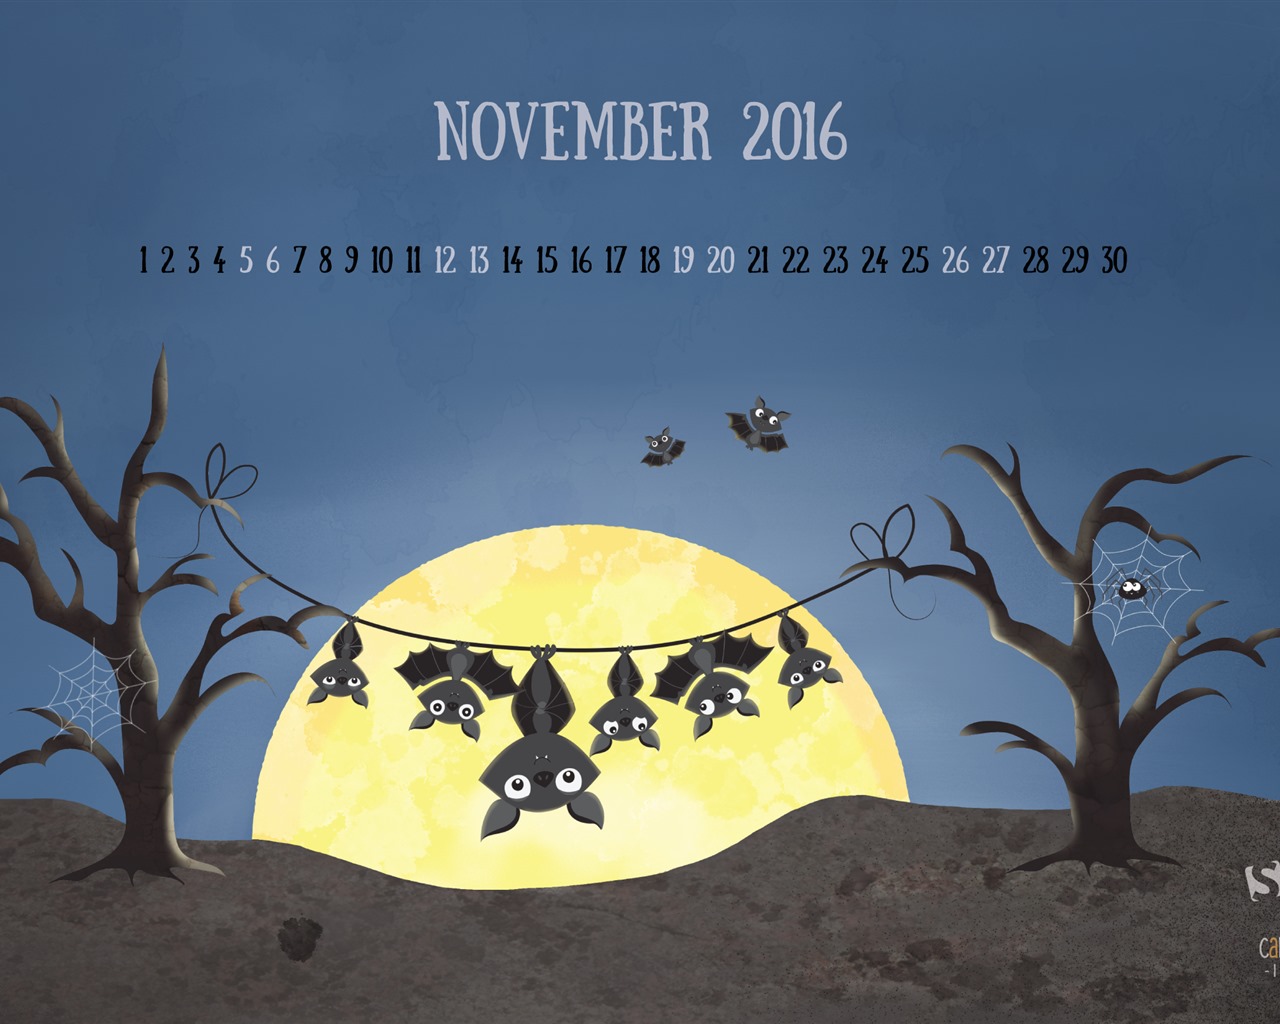 November 2016 calendar wallpaper (2) #15 - 1280x1024